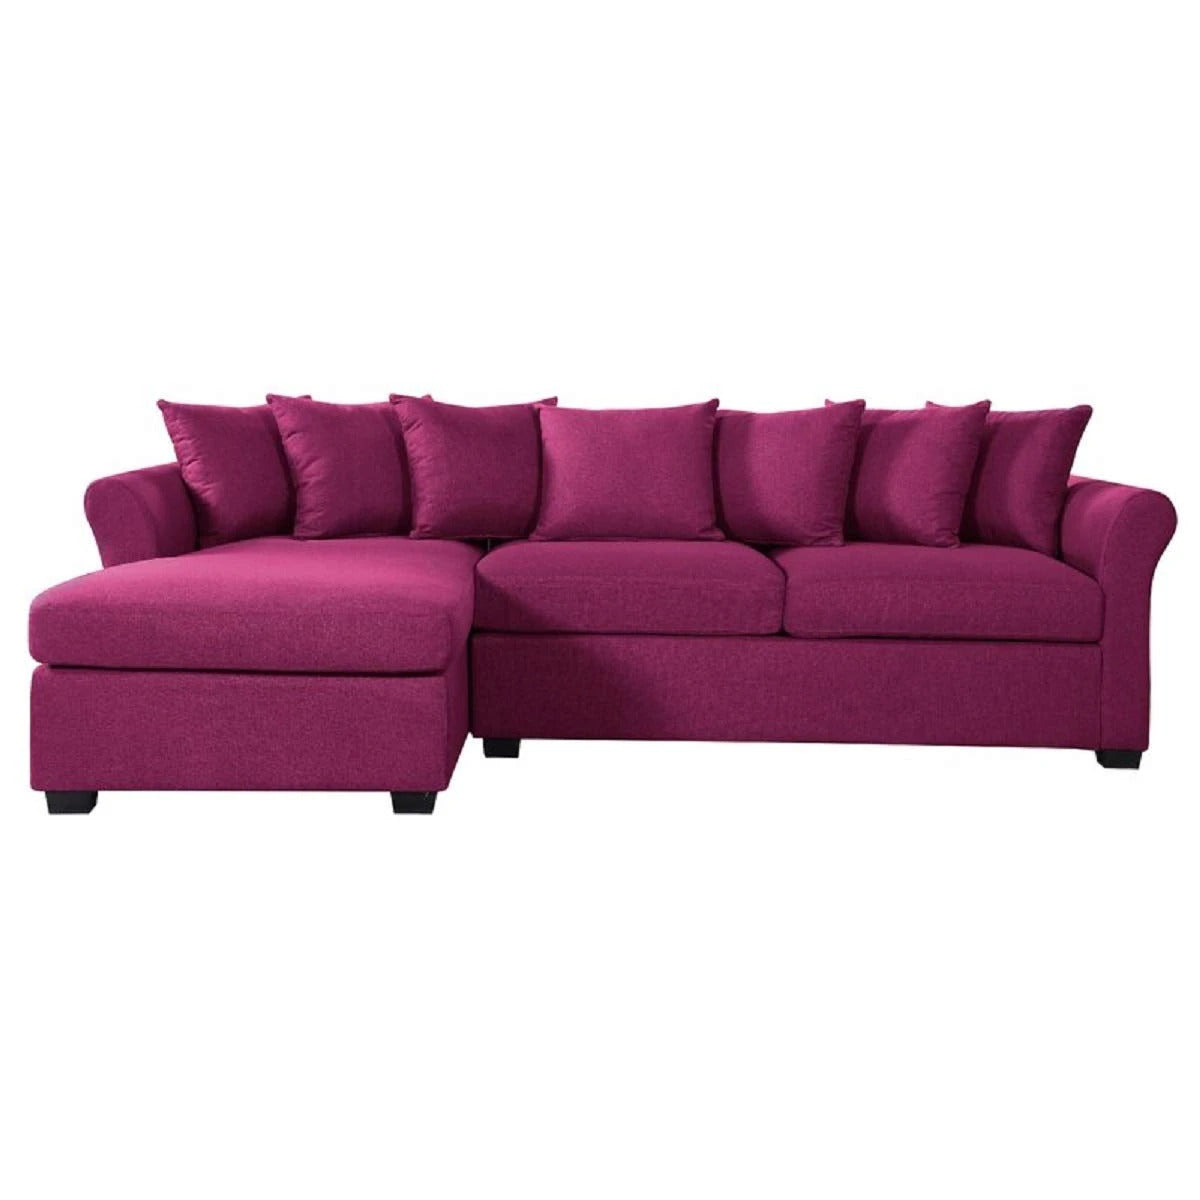 Designer Sofa Set:- Rain L Shape 5 Seater Fabric Luxury Furniture Sofa Set